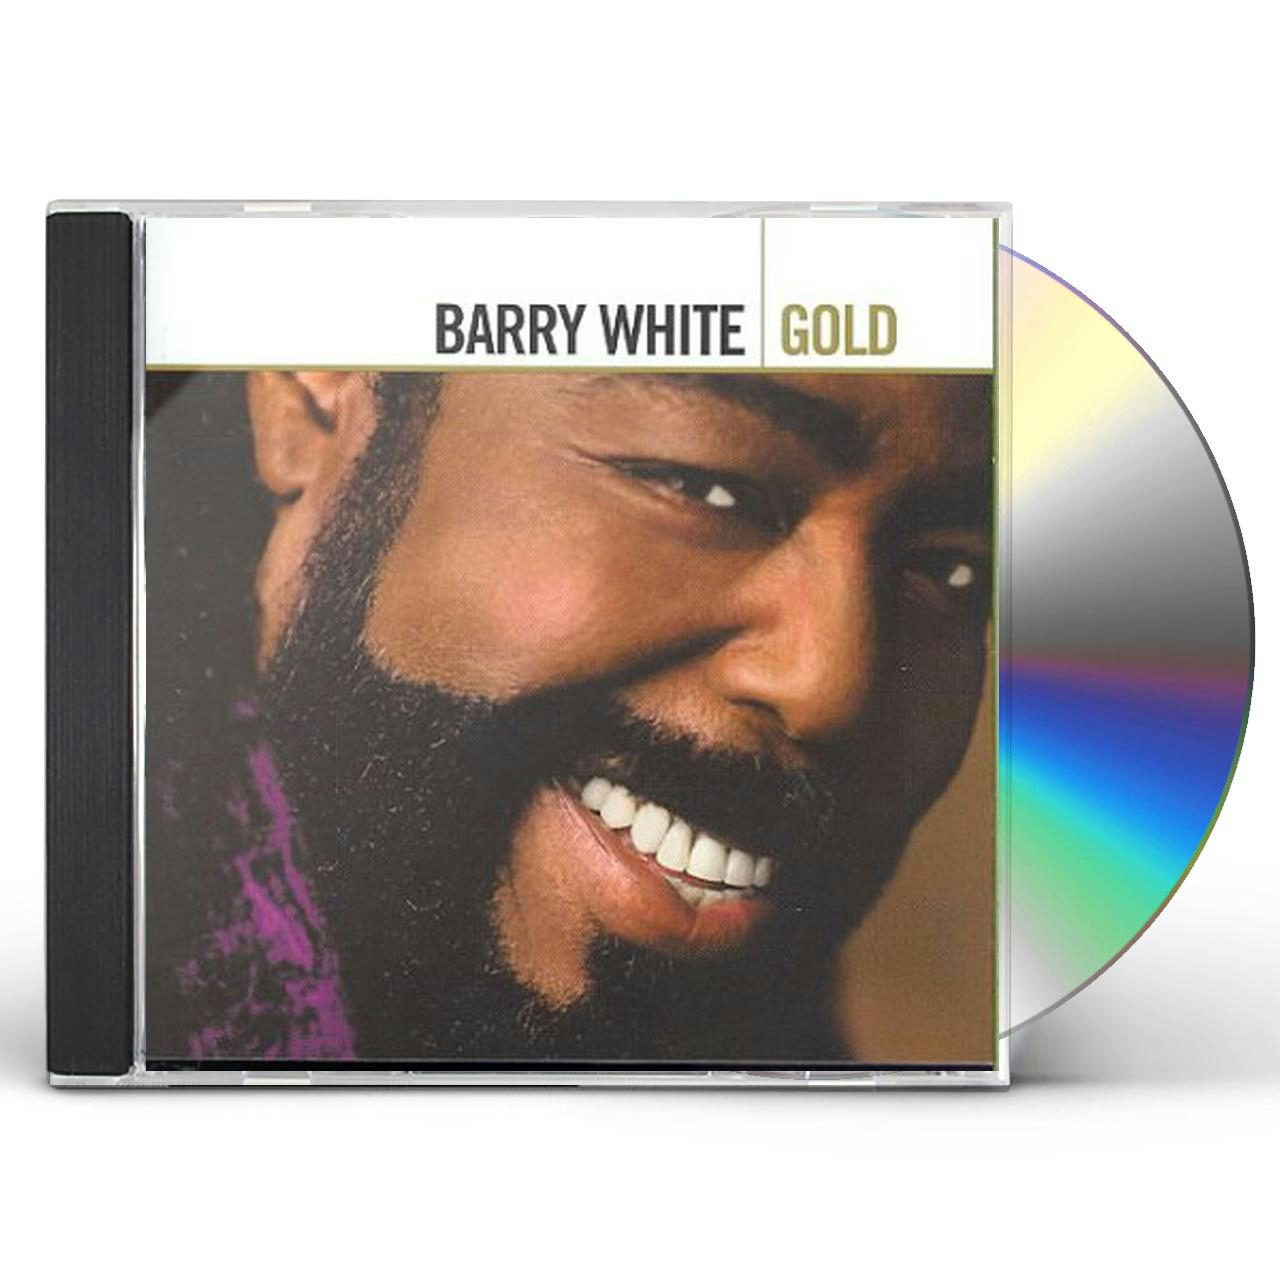 Barry White GOLD CD